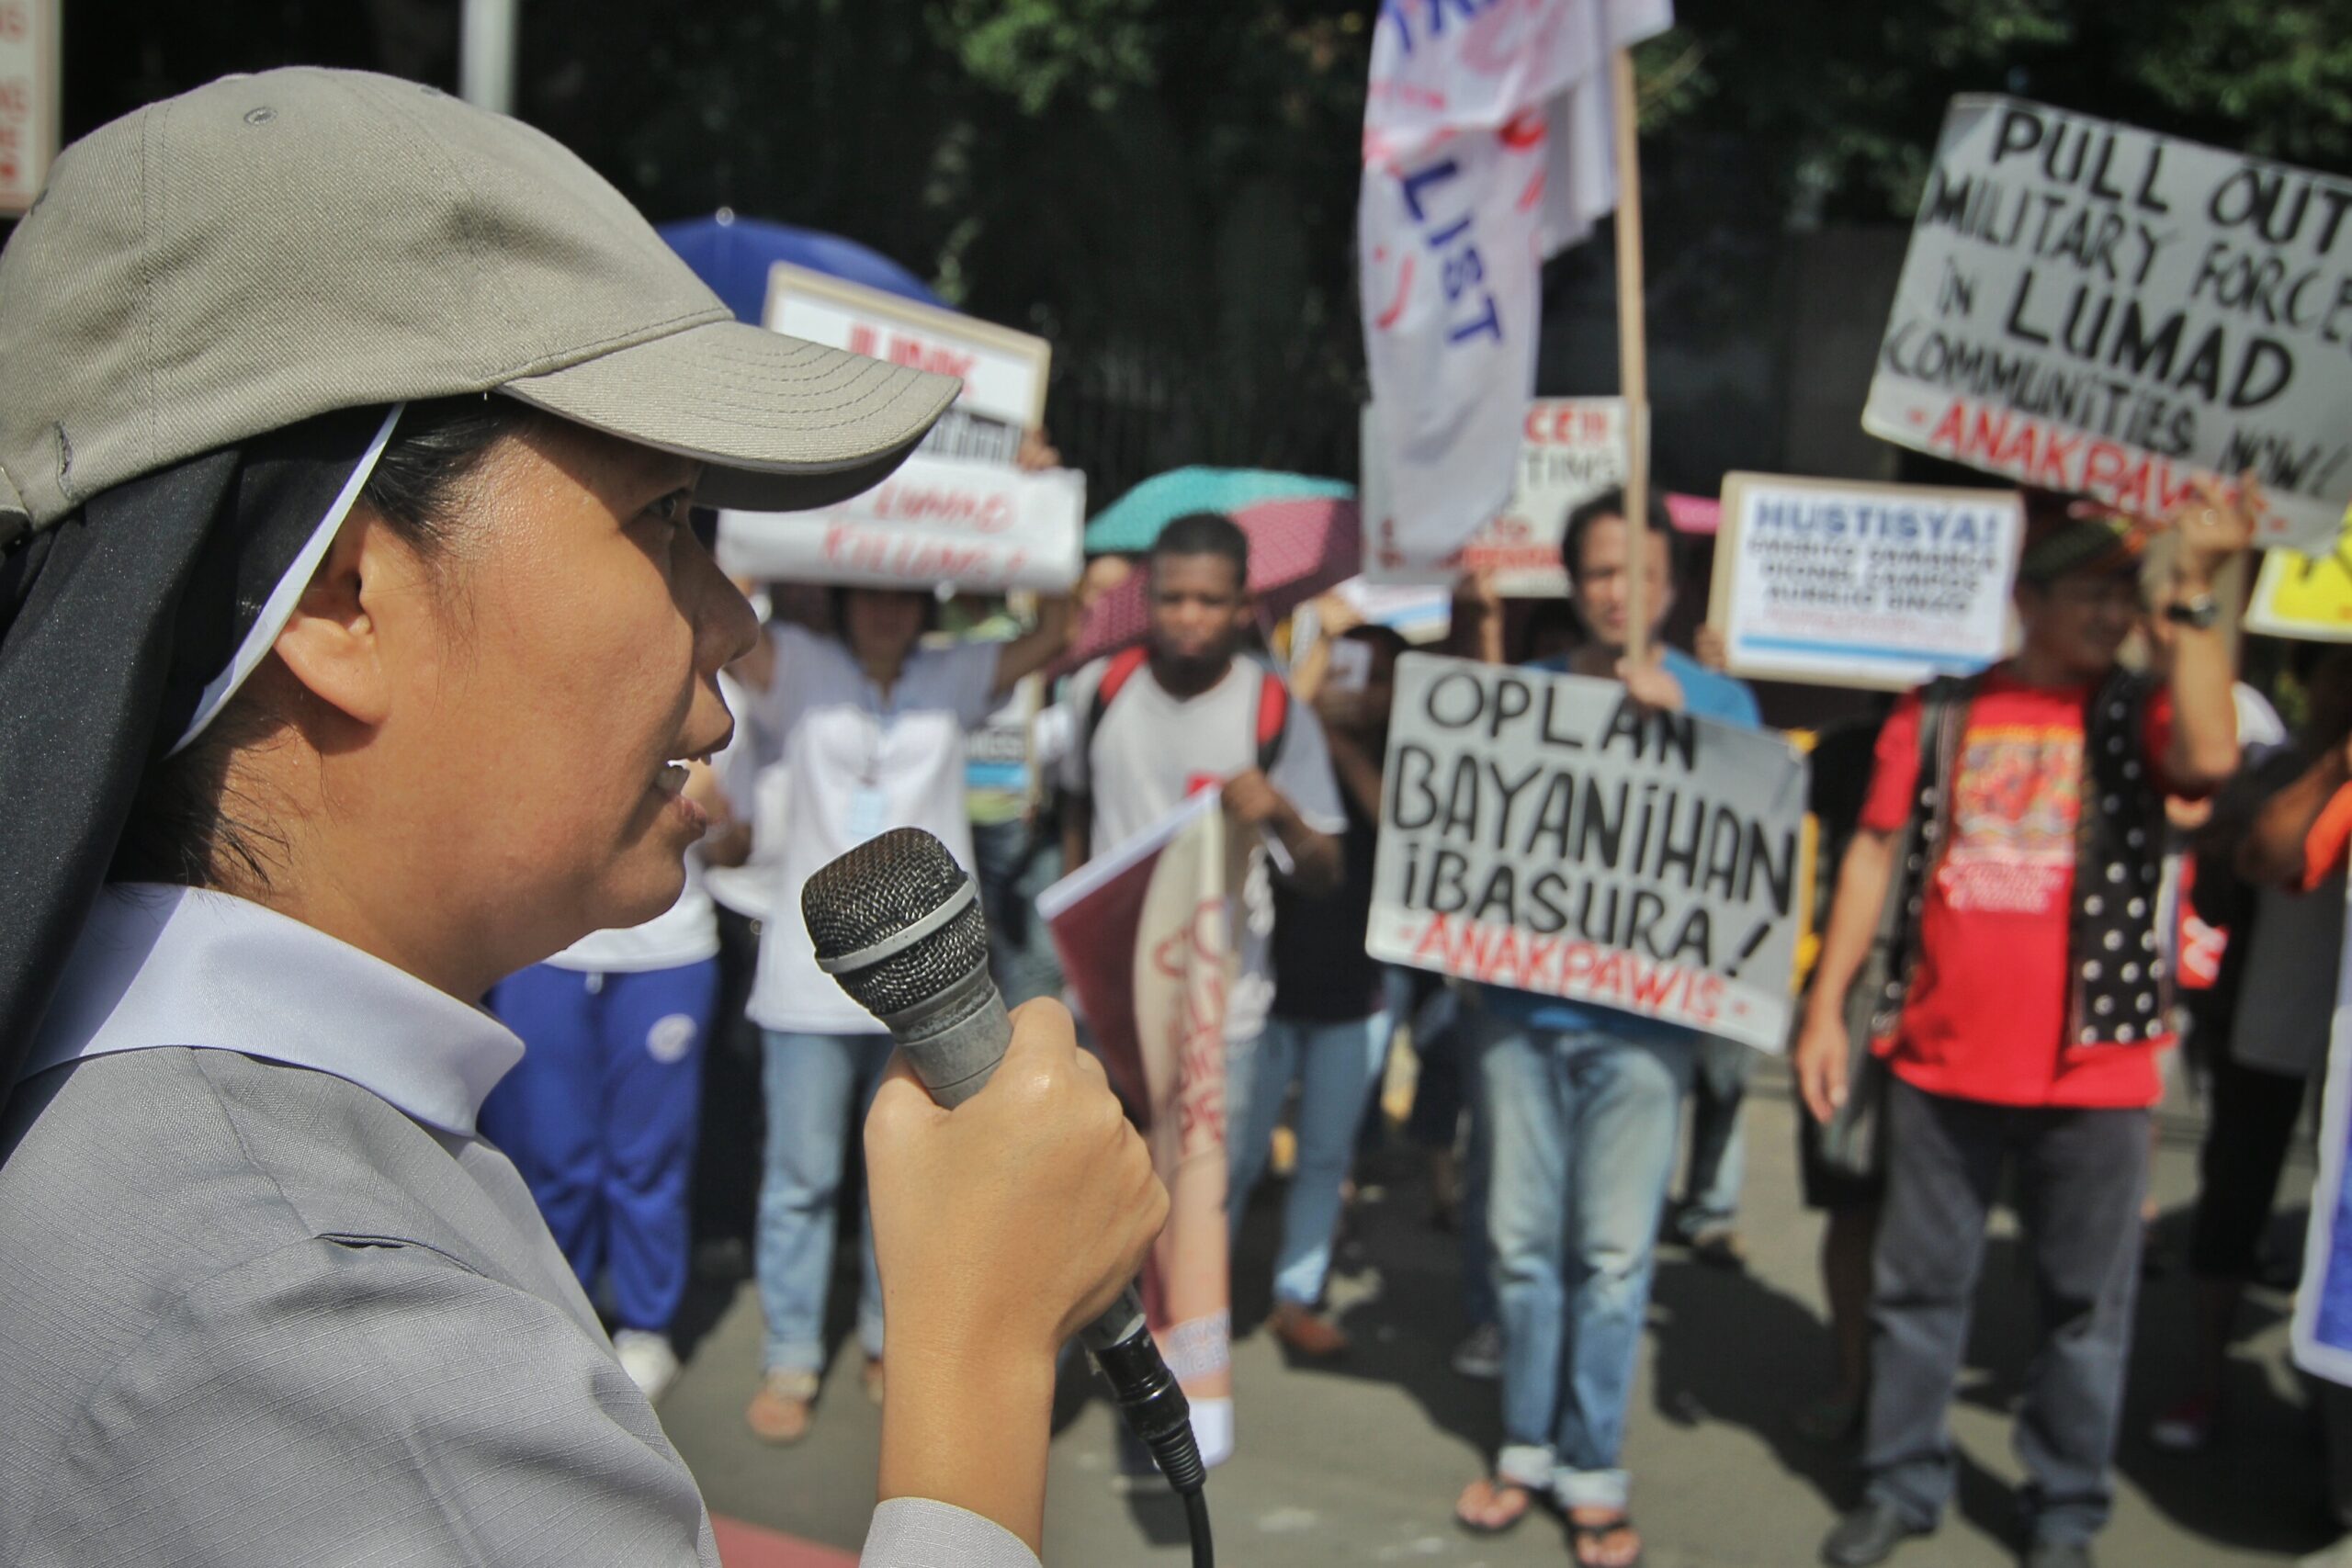 Catholic Church condemns Lumad killings in Mindanao